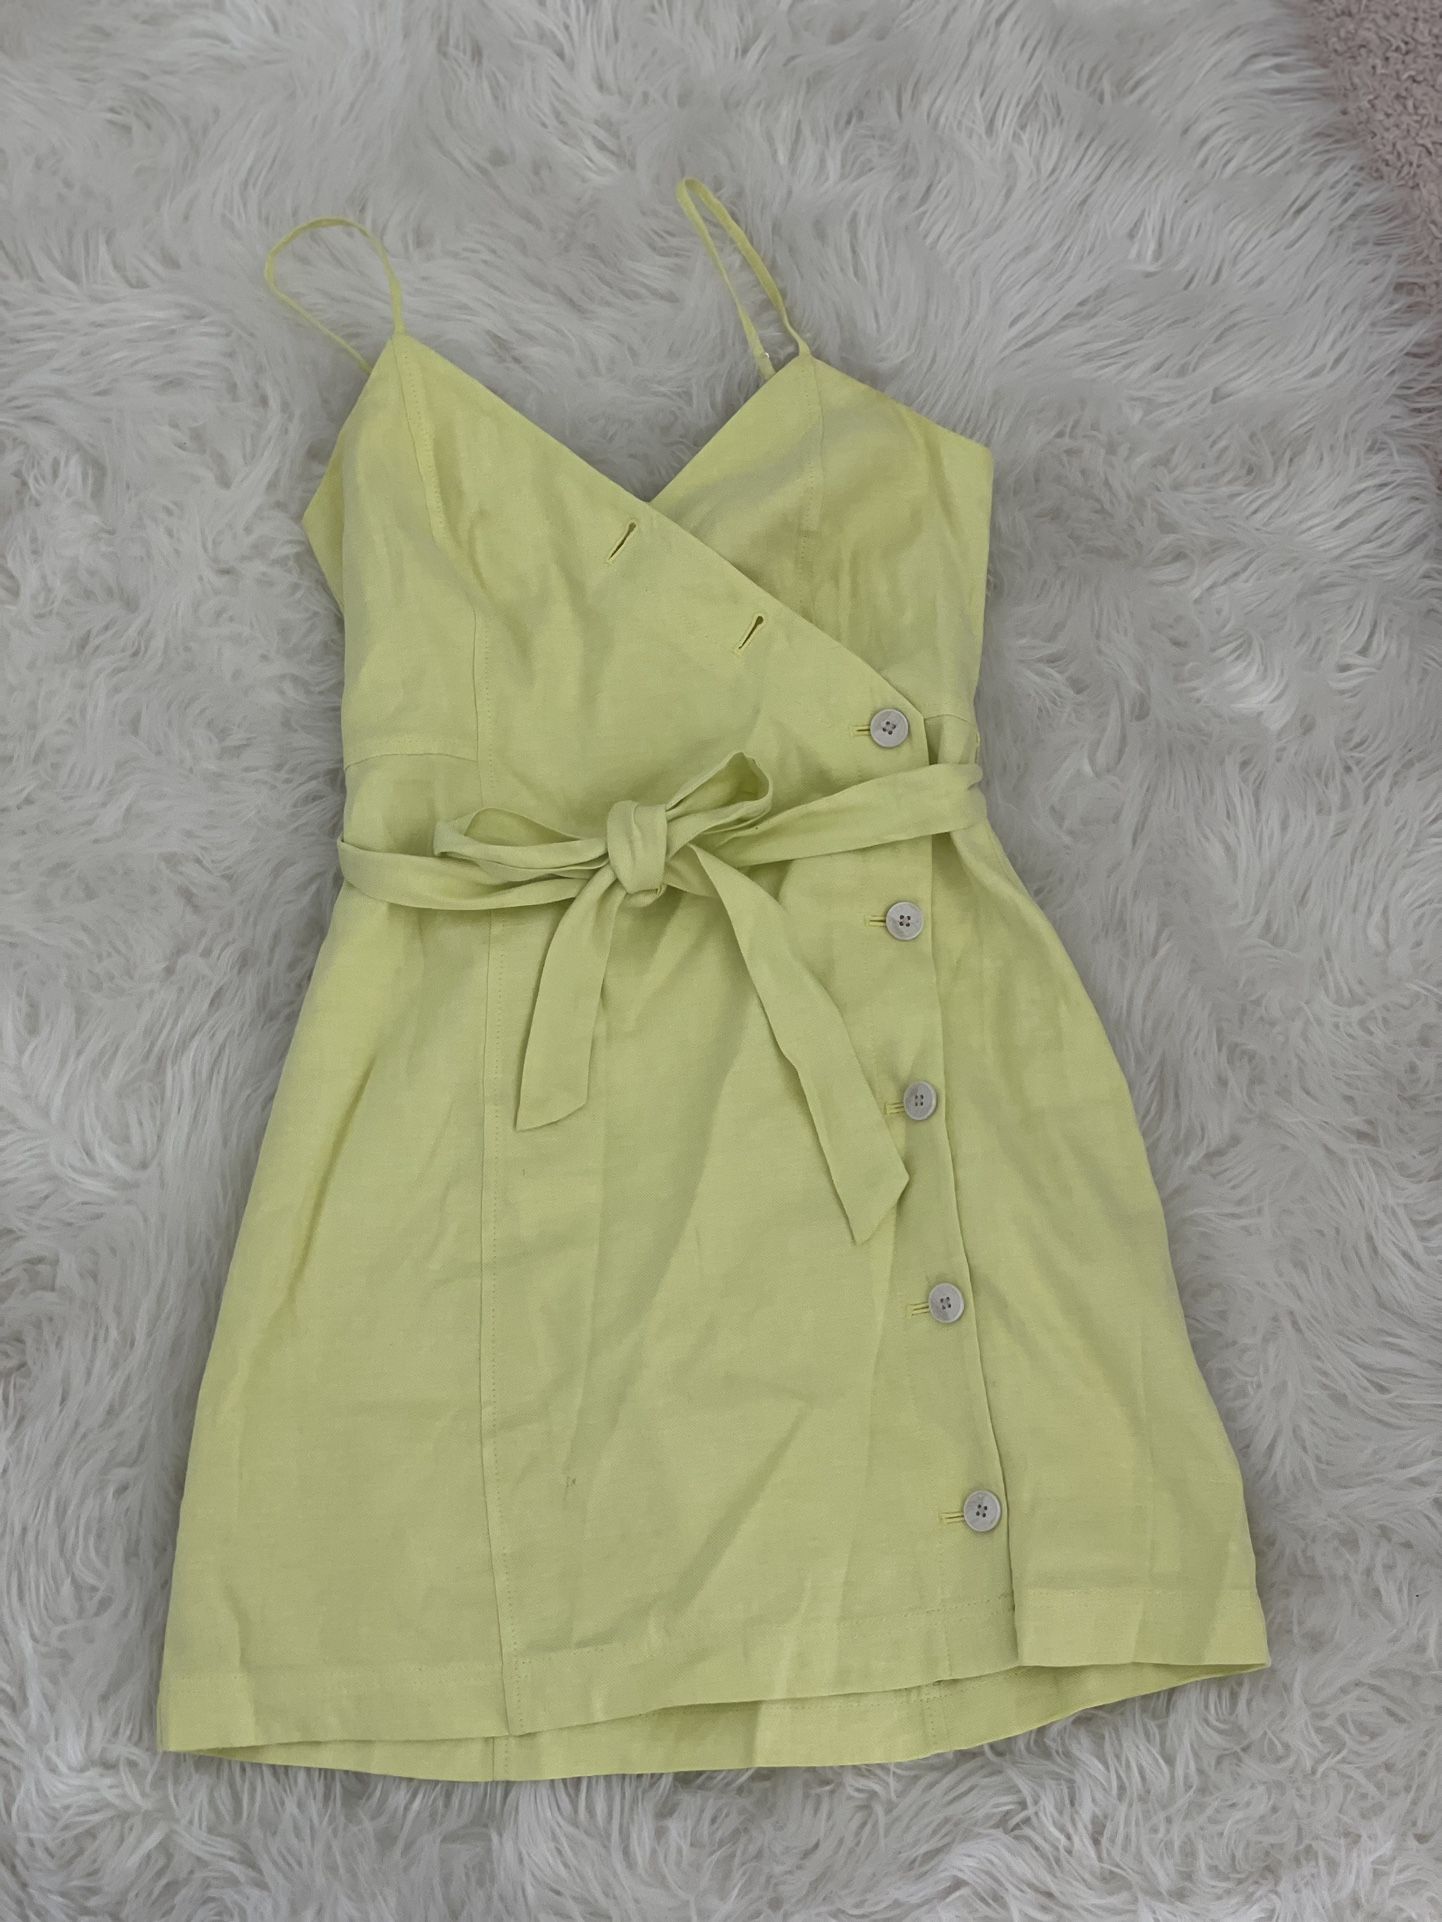 lime green banana republic dress, size small